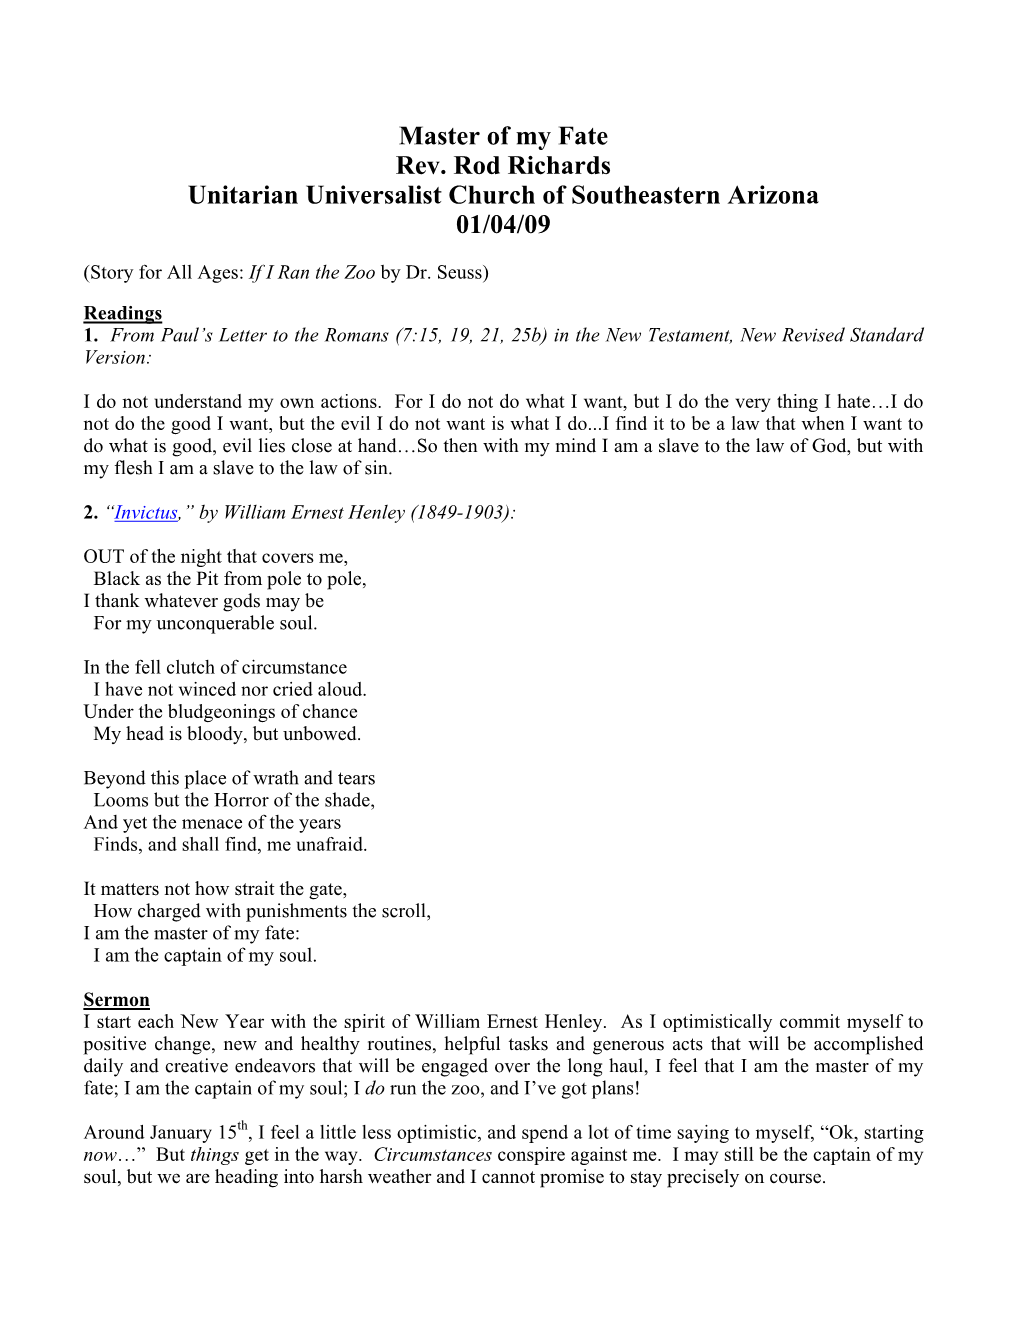 Master of My Fate Rev. Rod Richards Unitarian Universalist Church of Southeastern Arizona 01/04/09